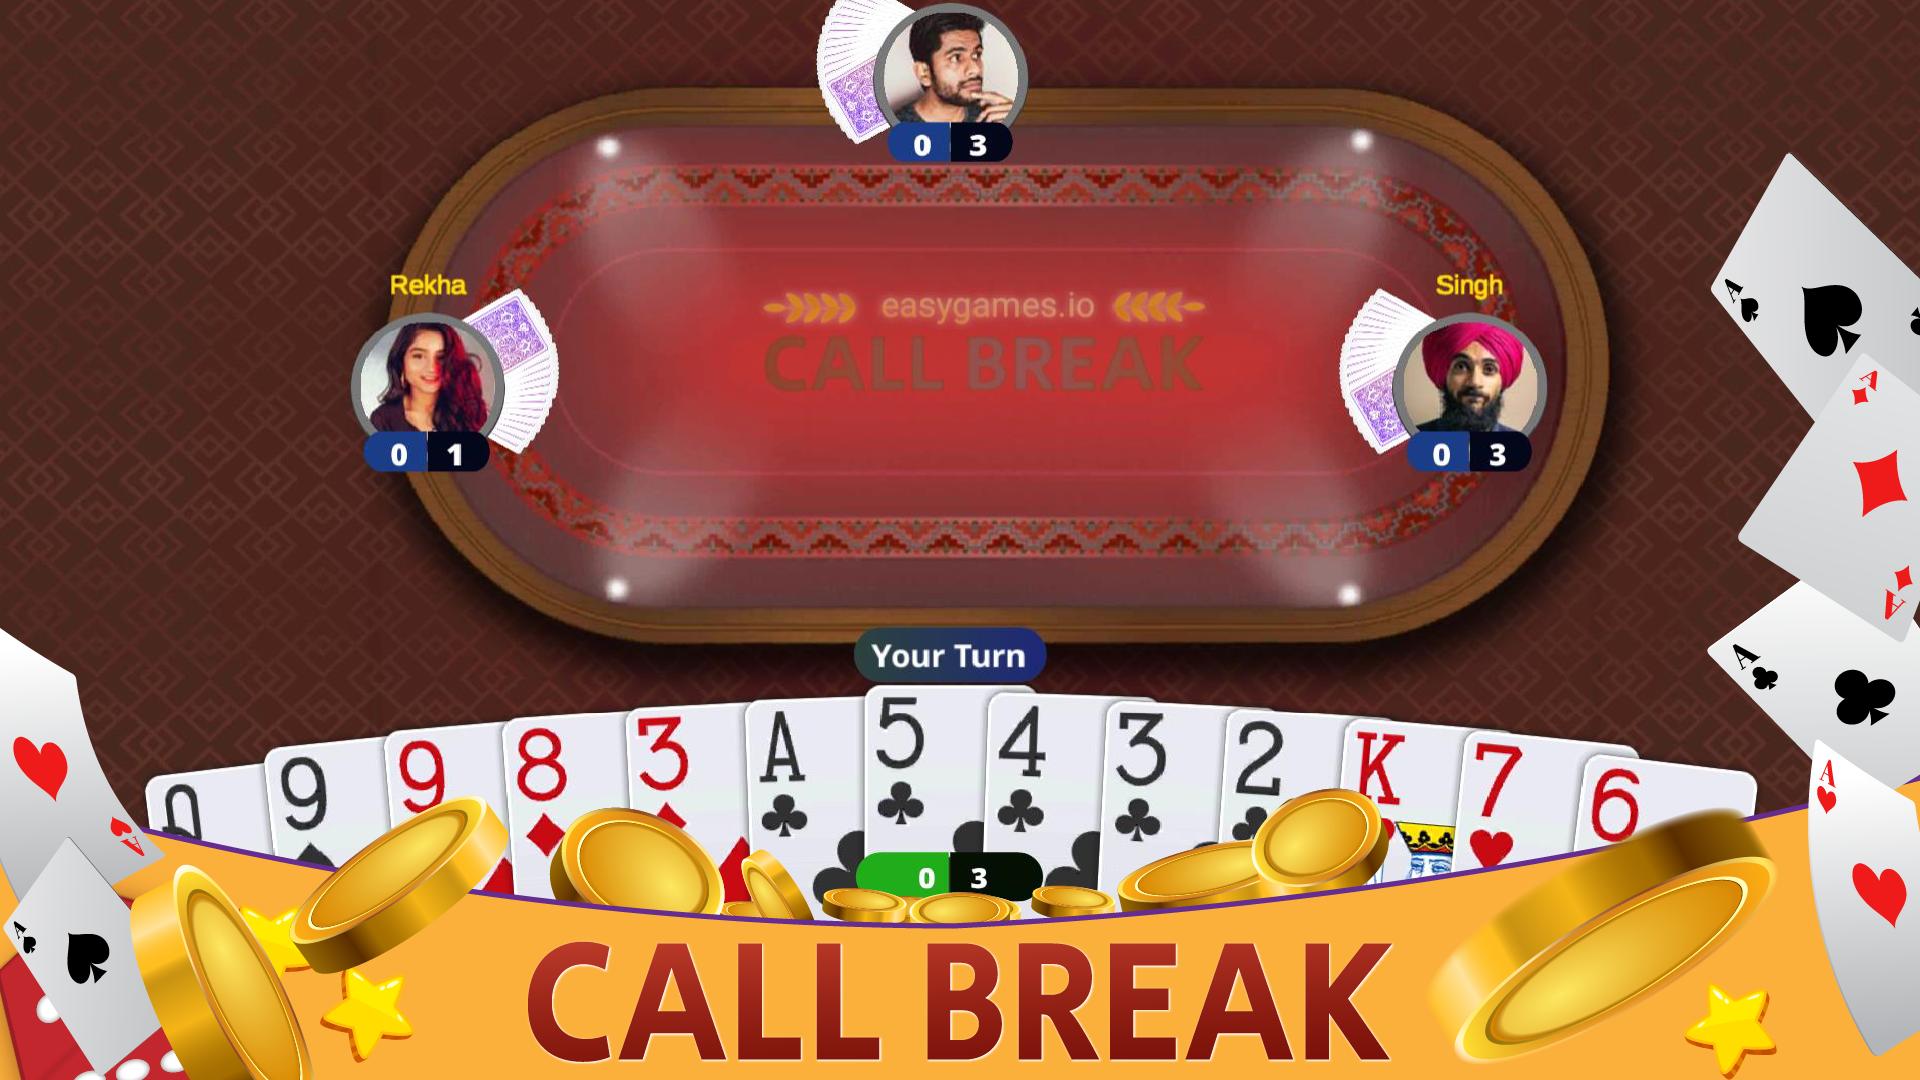 Callbreak, Ludo, Rummy & 9 Card Game -Easygames.io 20210120 Screenshot 8